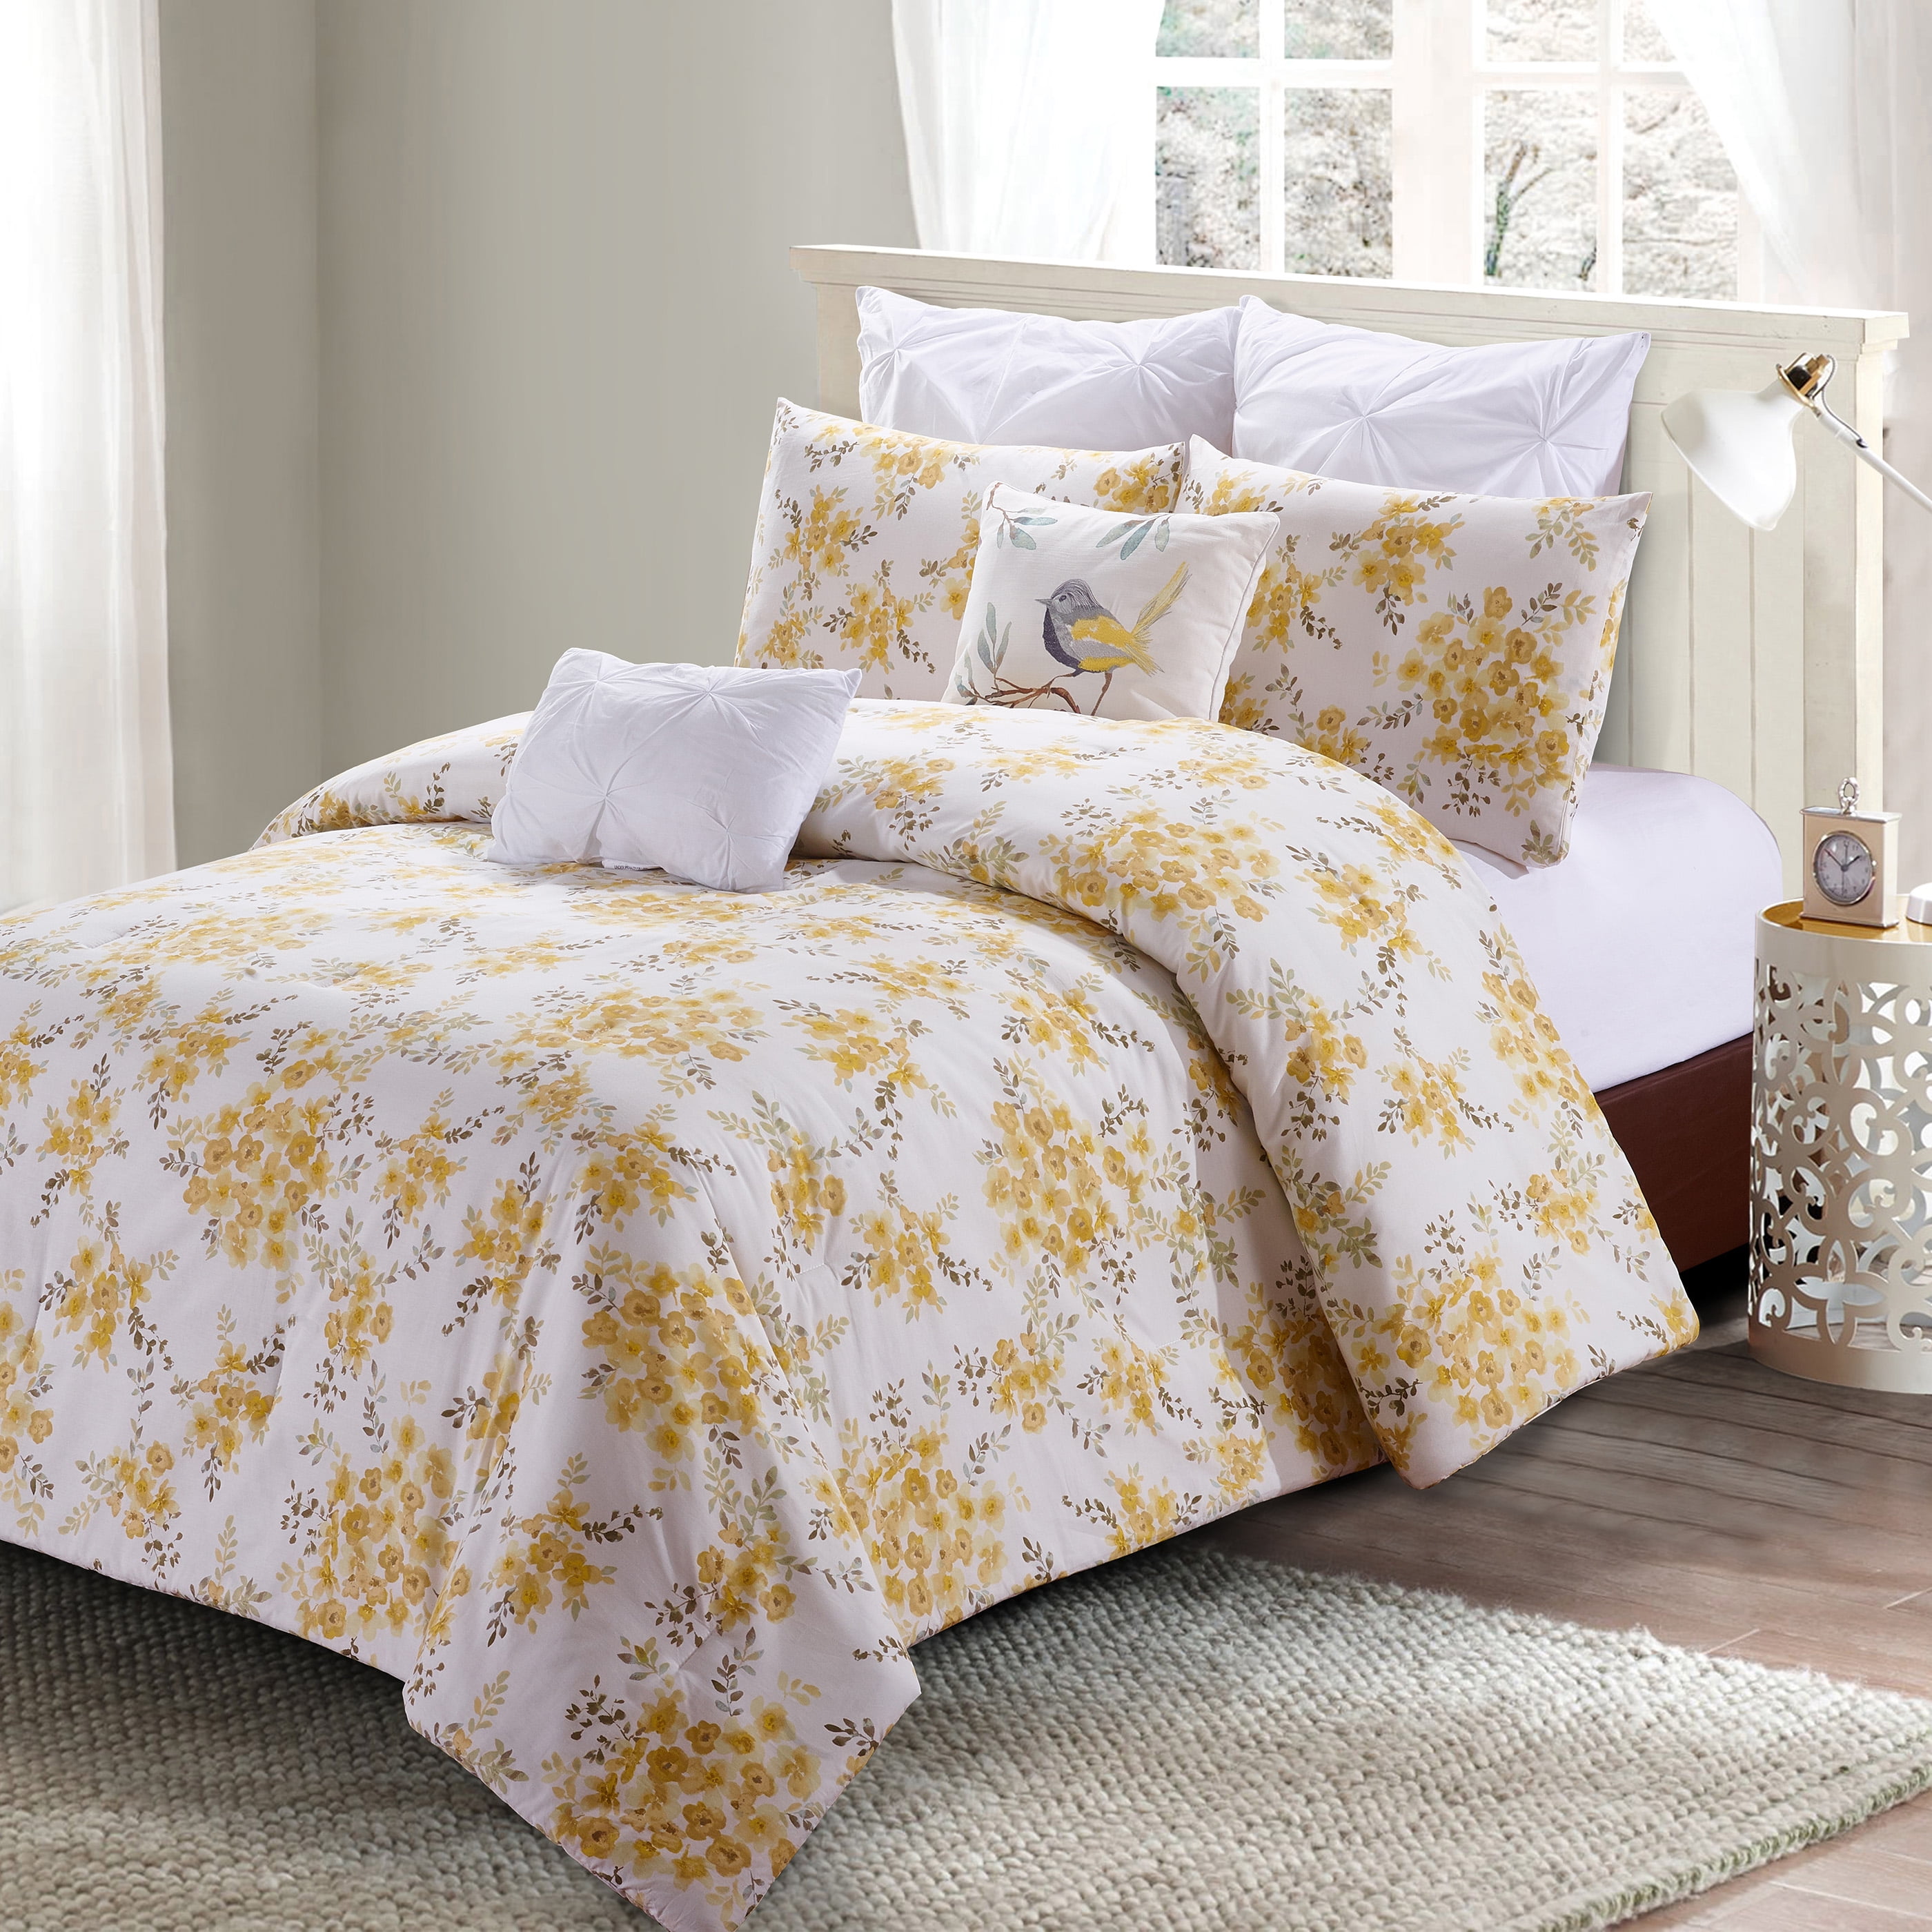 DENA HOME SAVANNAH FLORAL 3P Full/ Queen Comforter Set NEW 1ST QUALITY $215 